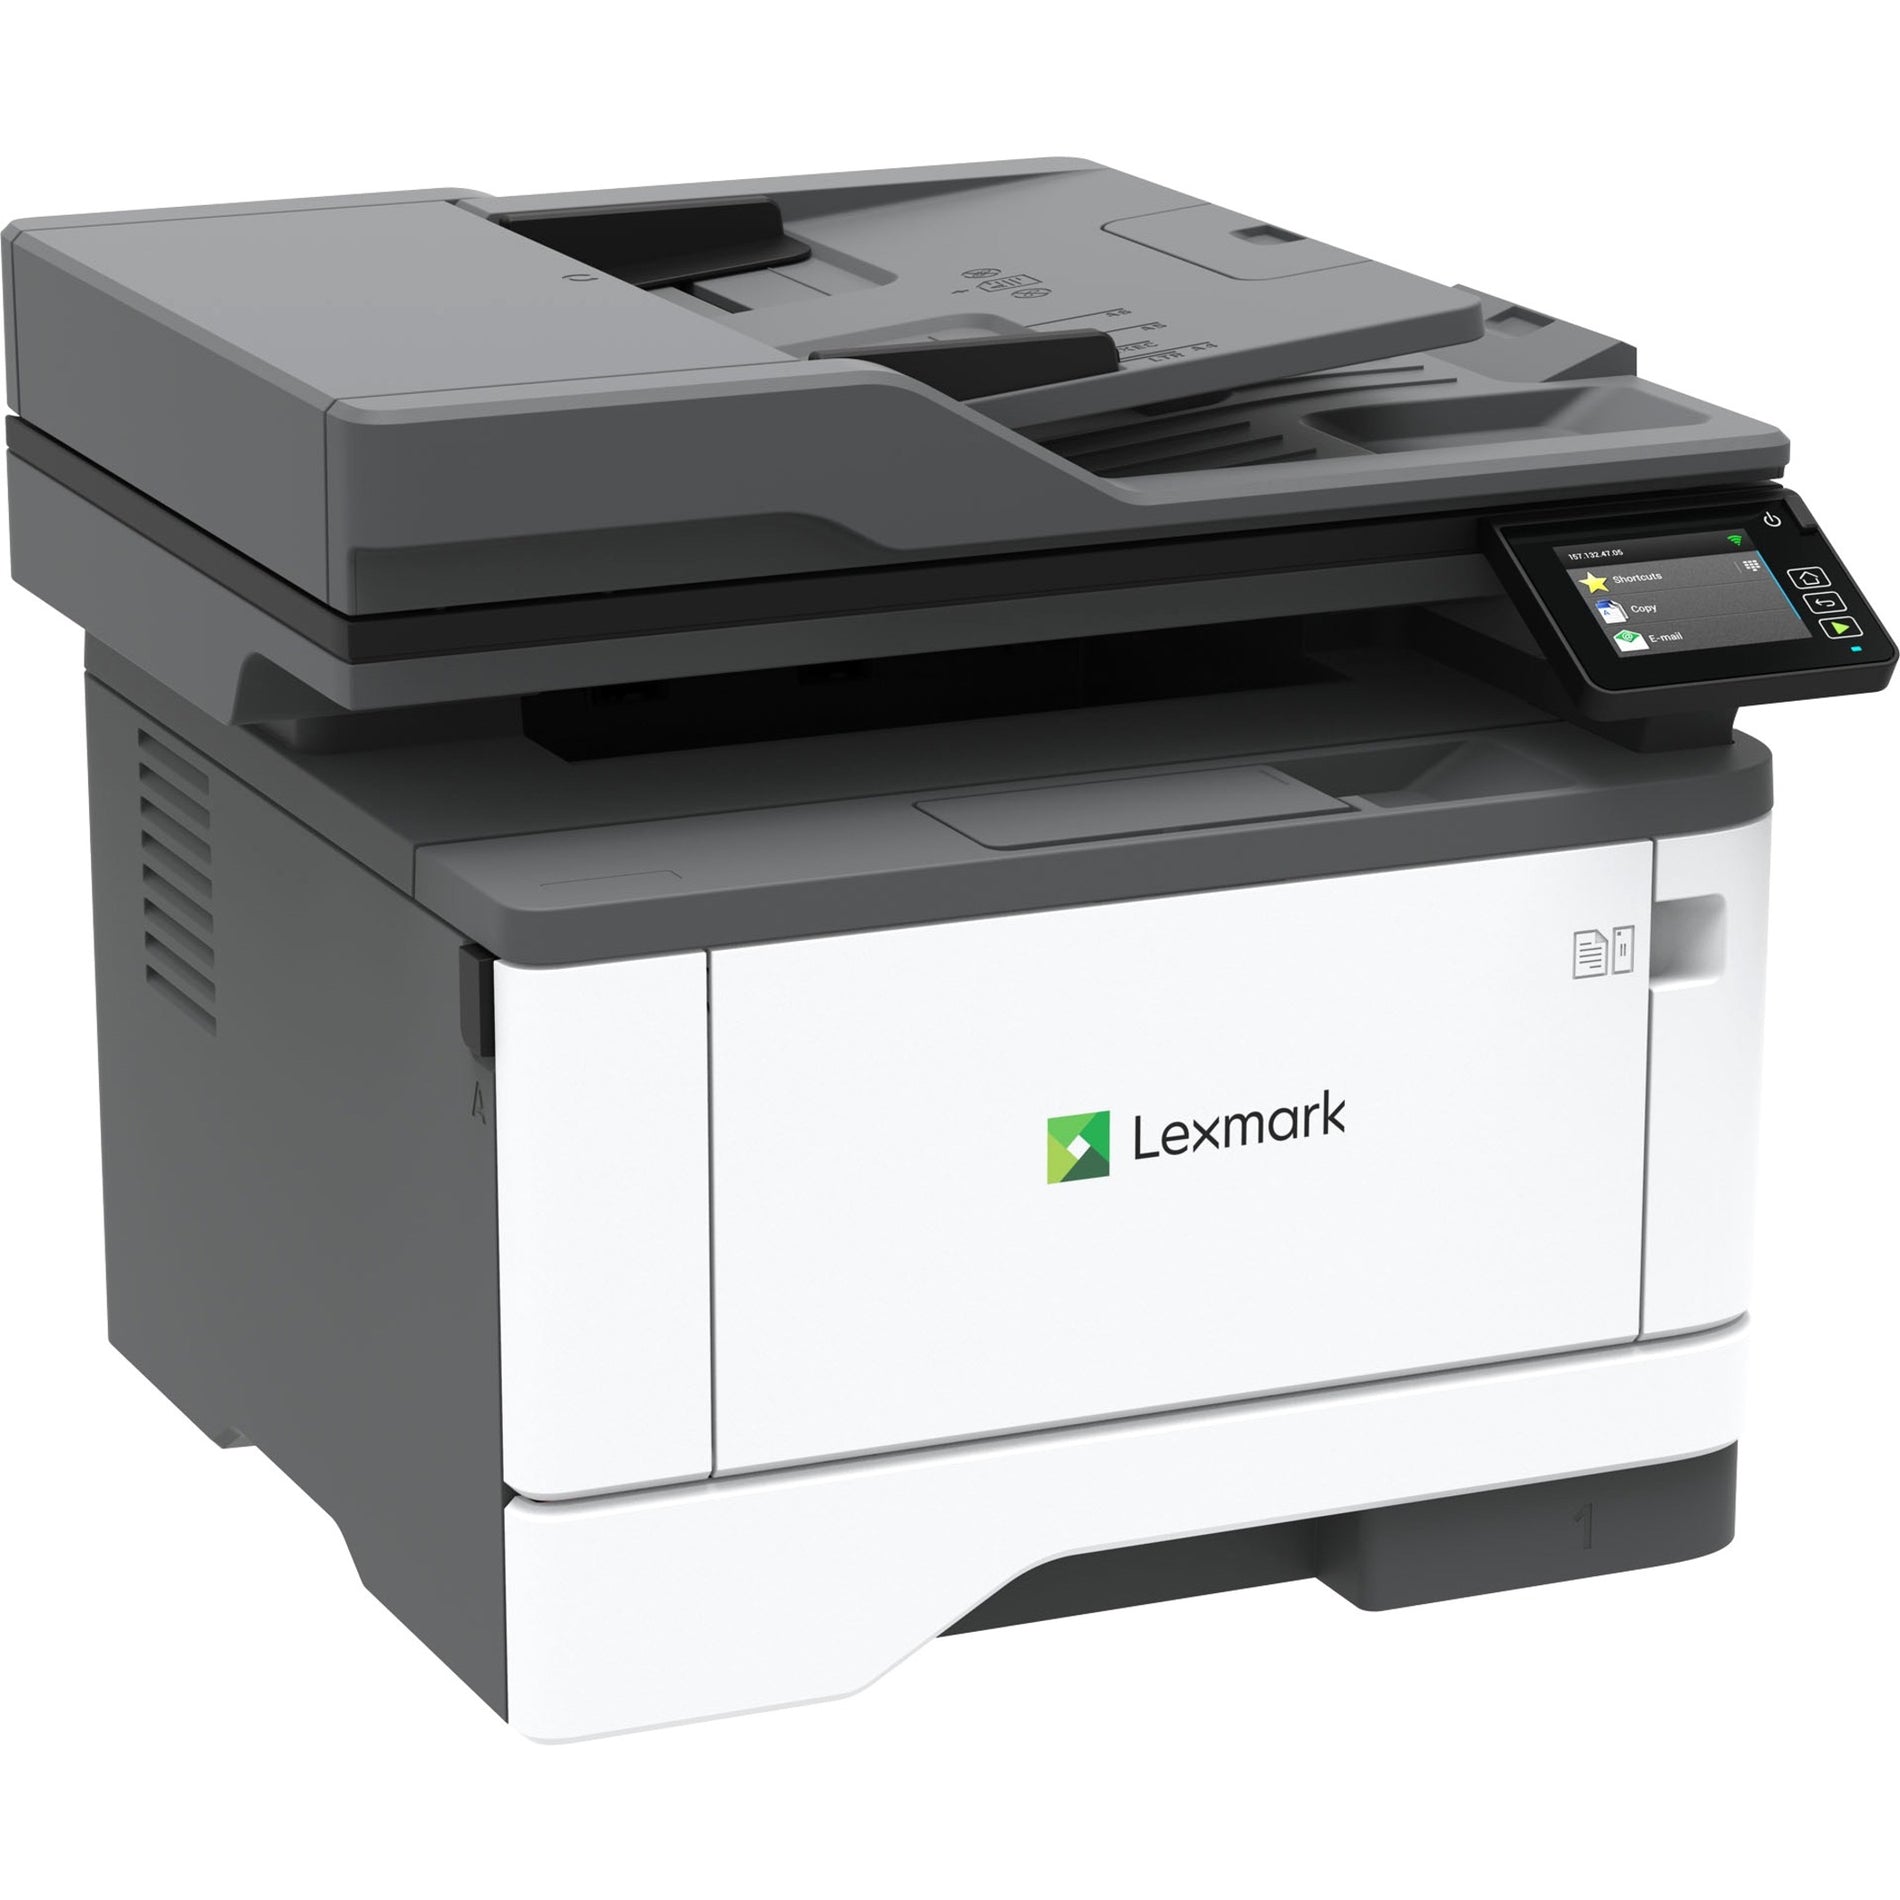 Lexmark 29ST010 MX431ADN Multifunction Laser Printer, Monochrome, Automatic Duplex Printing, 42 ppm, 600 x 600 dpi